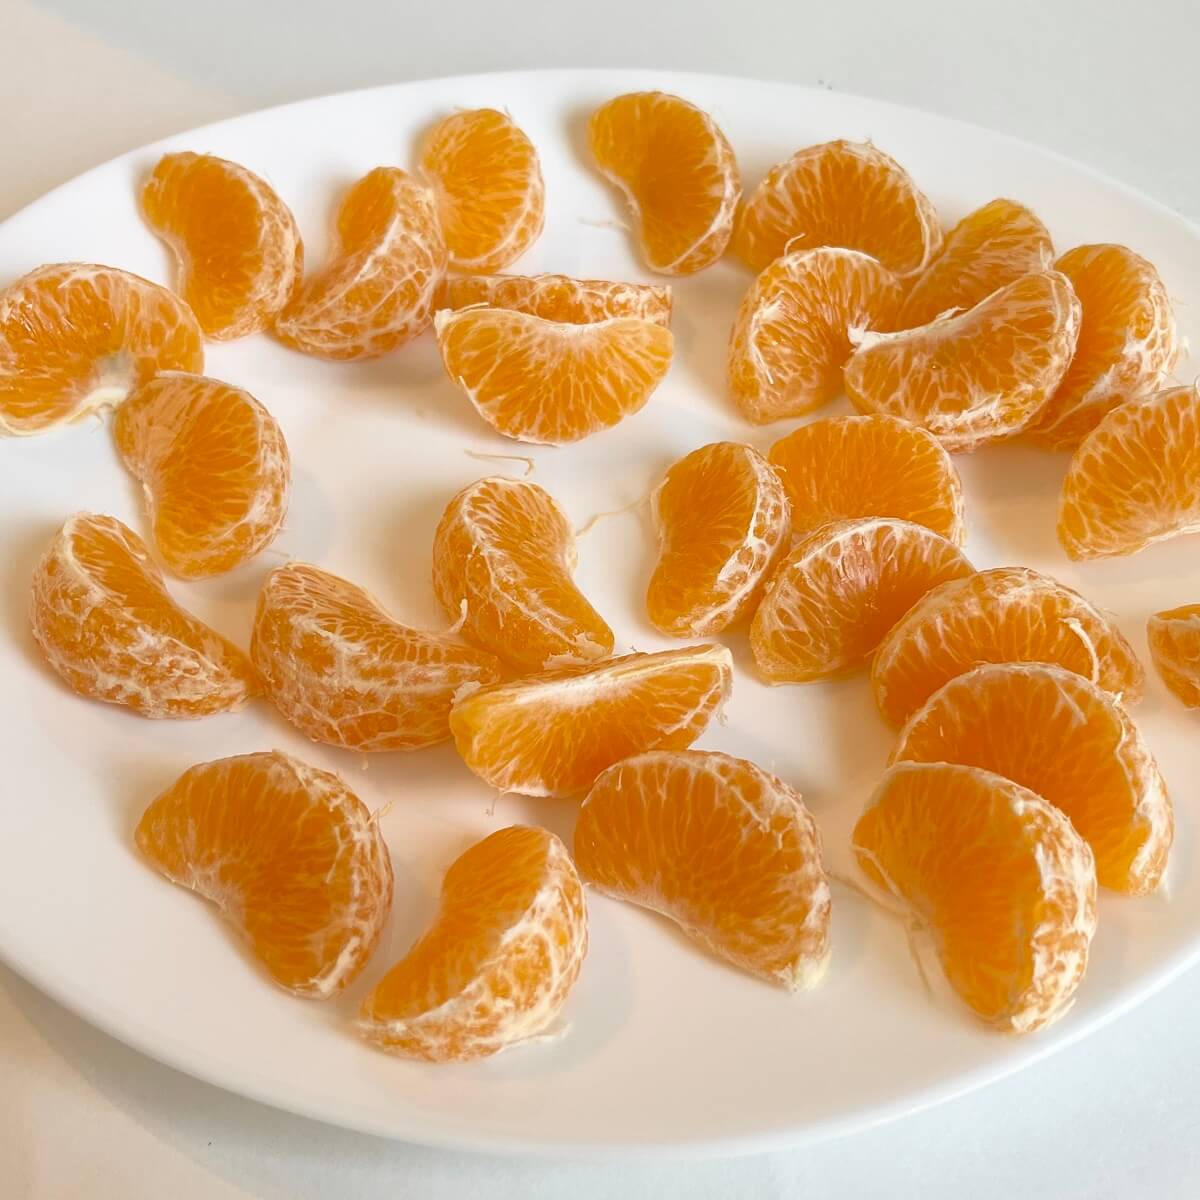 Clementine orange segments on a white plate.